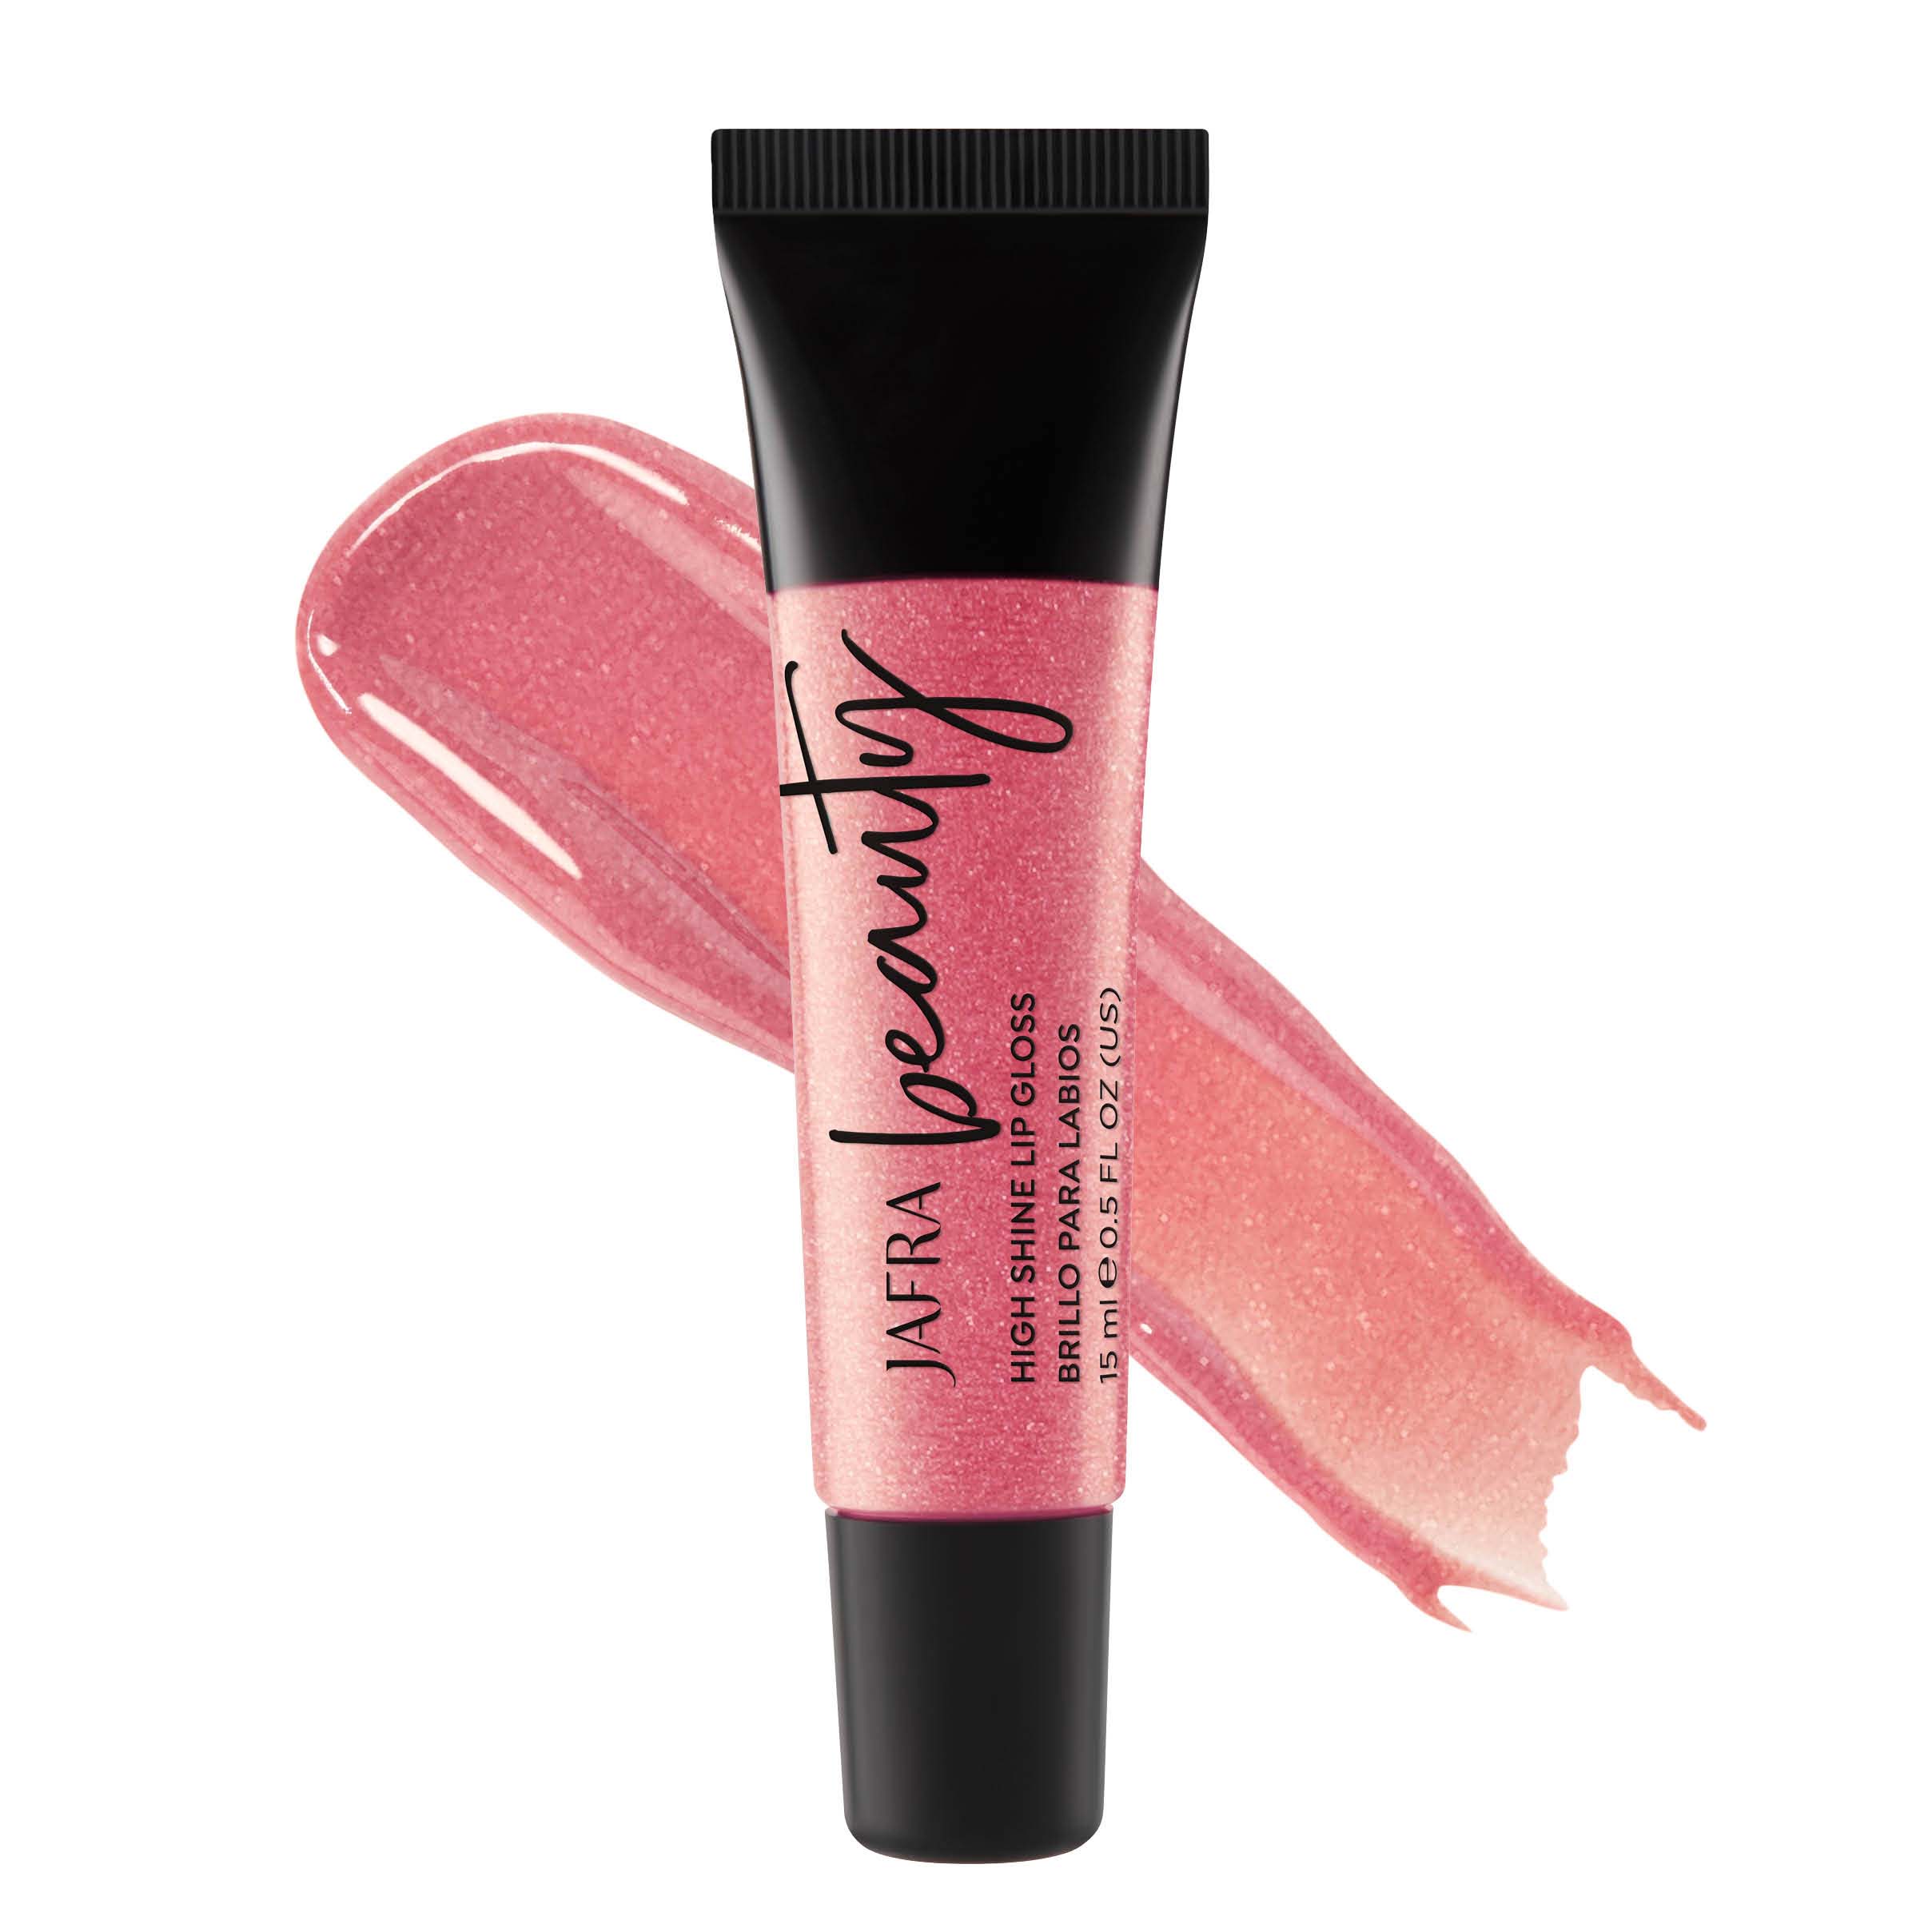 JAFRA Beauty High Shine Lip Gloss - Enchanting Pink